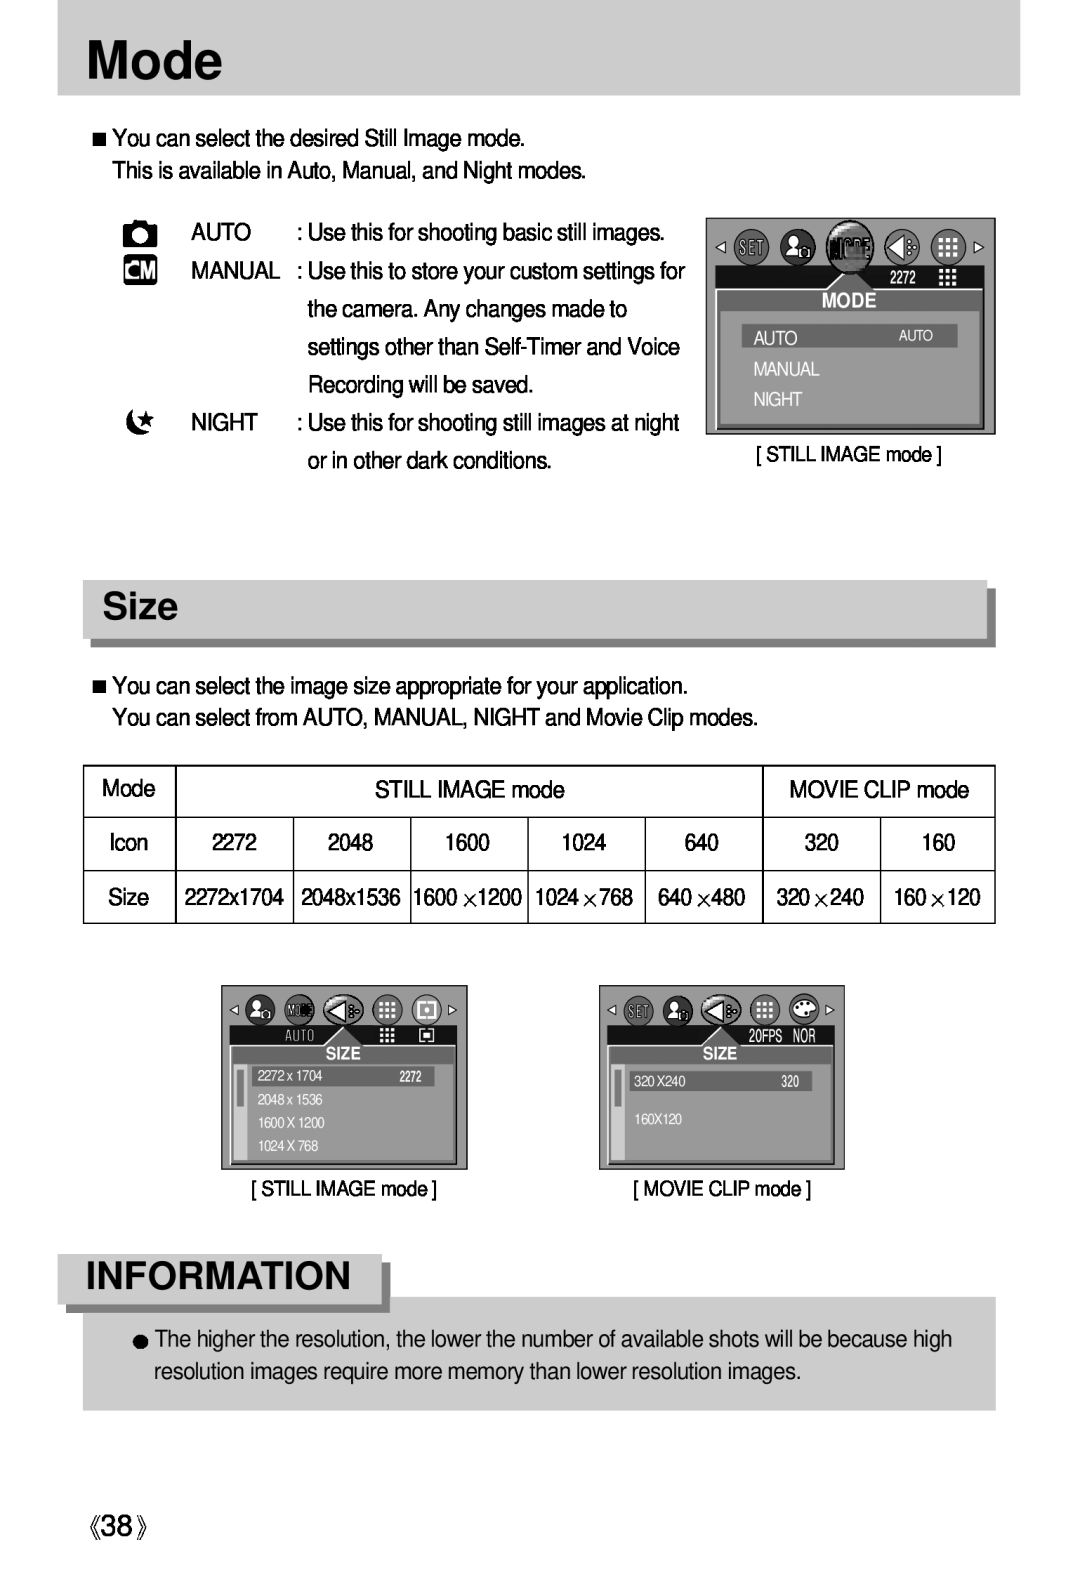 Samsung Digimax U-CA user manual Mode, Size, Information, Autoauto Manual Night 